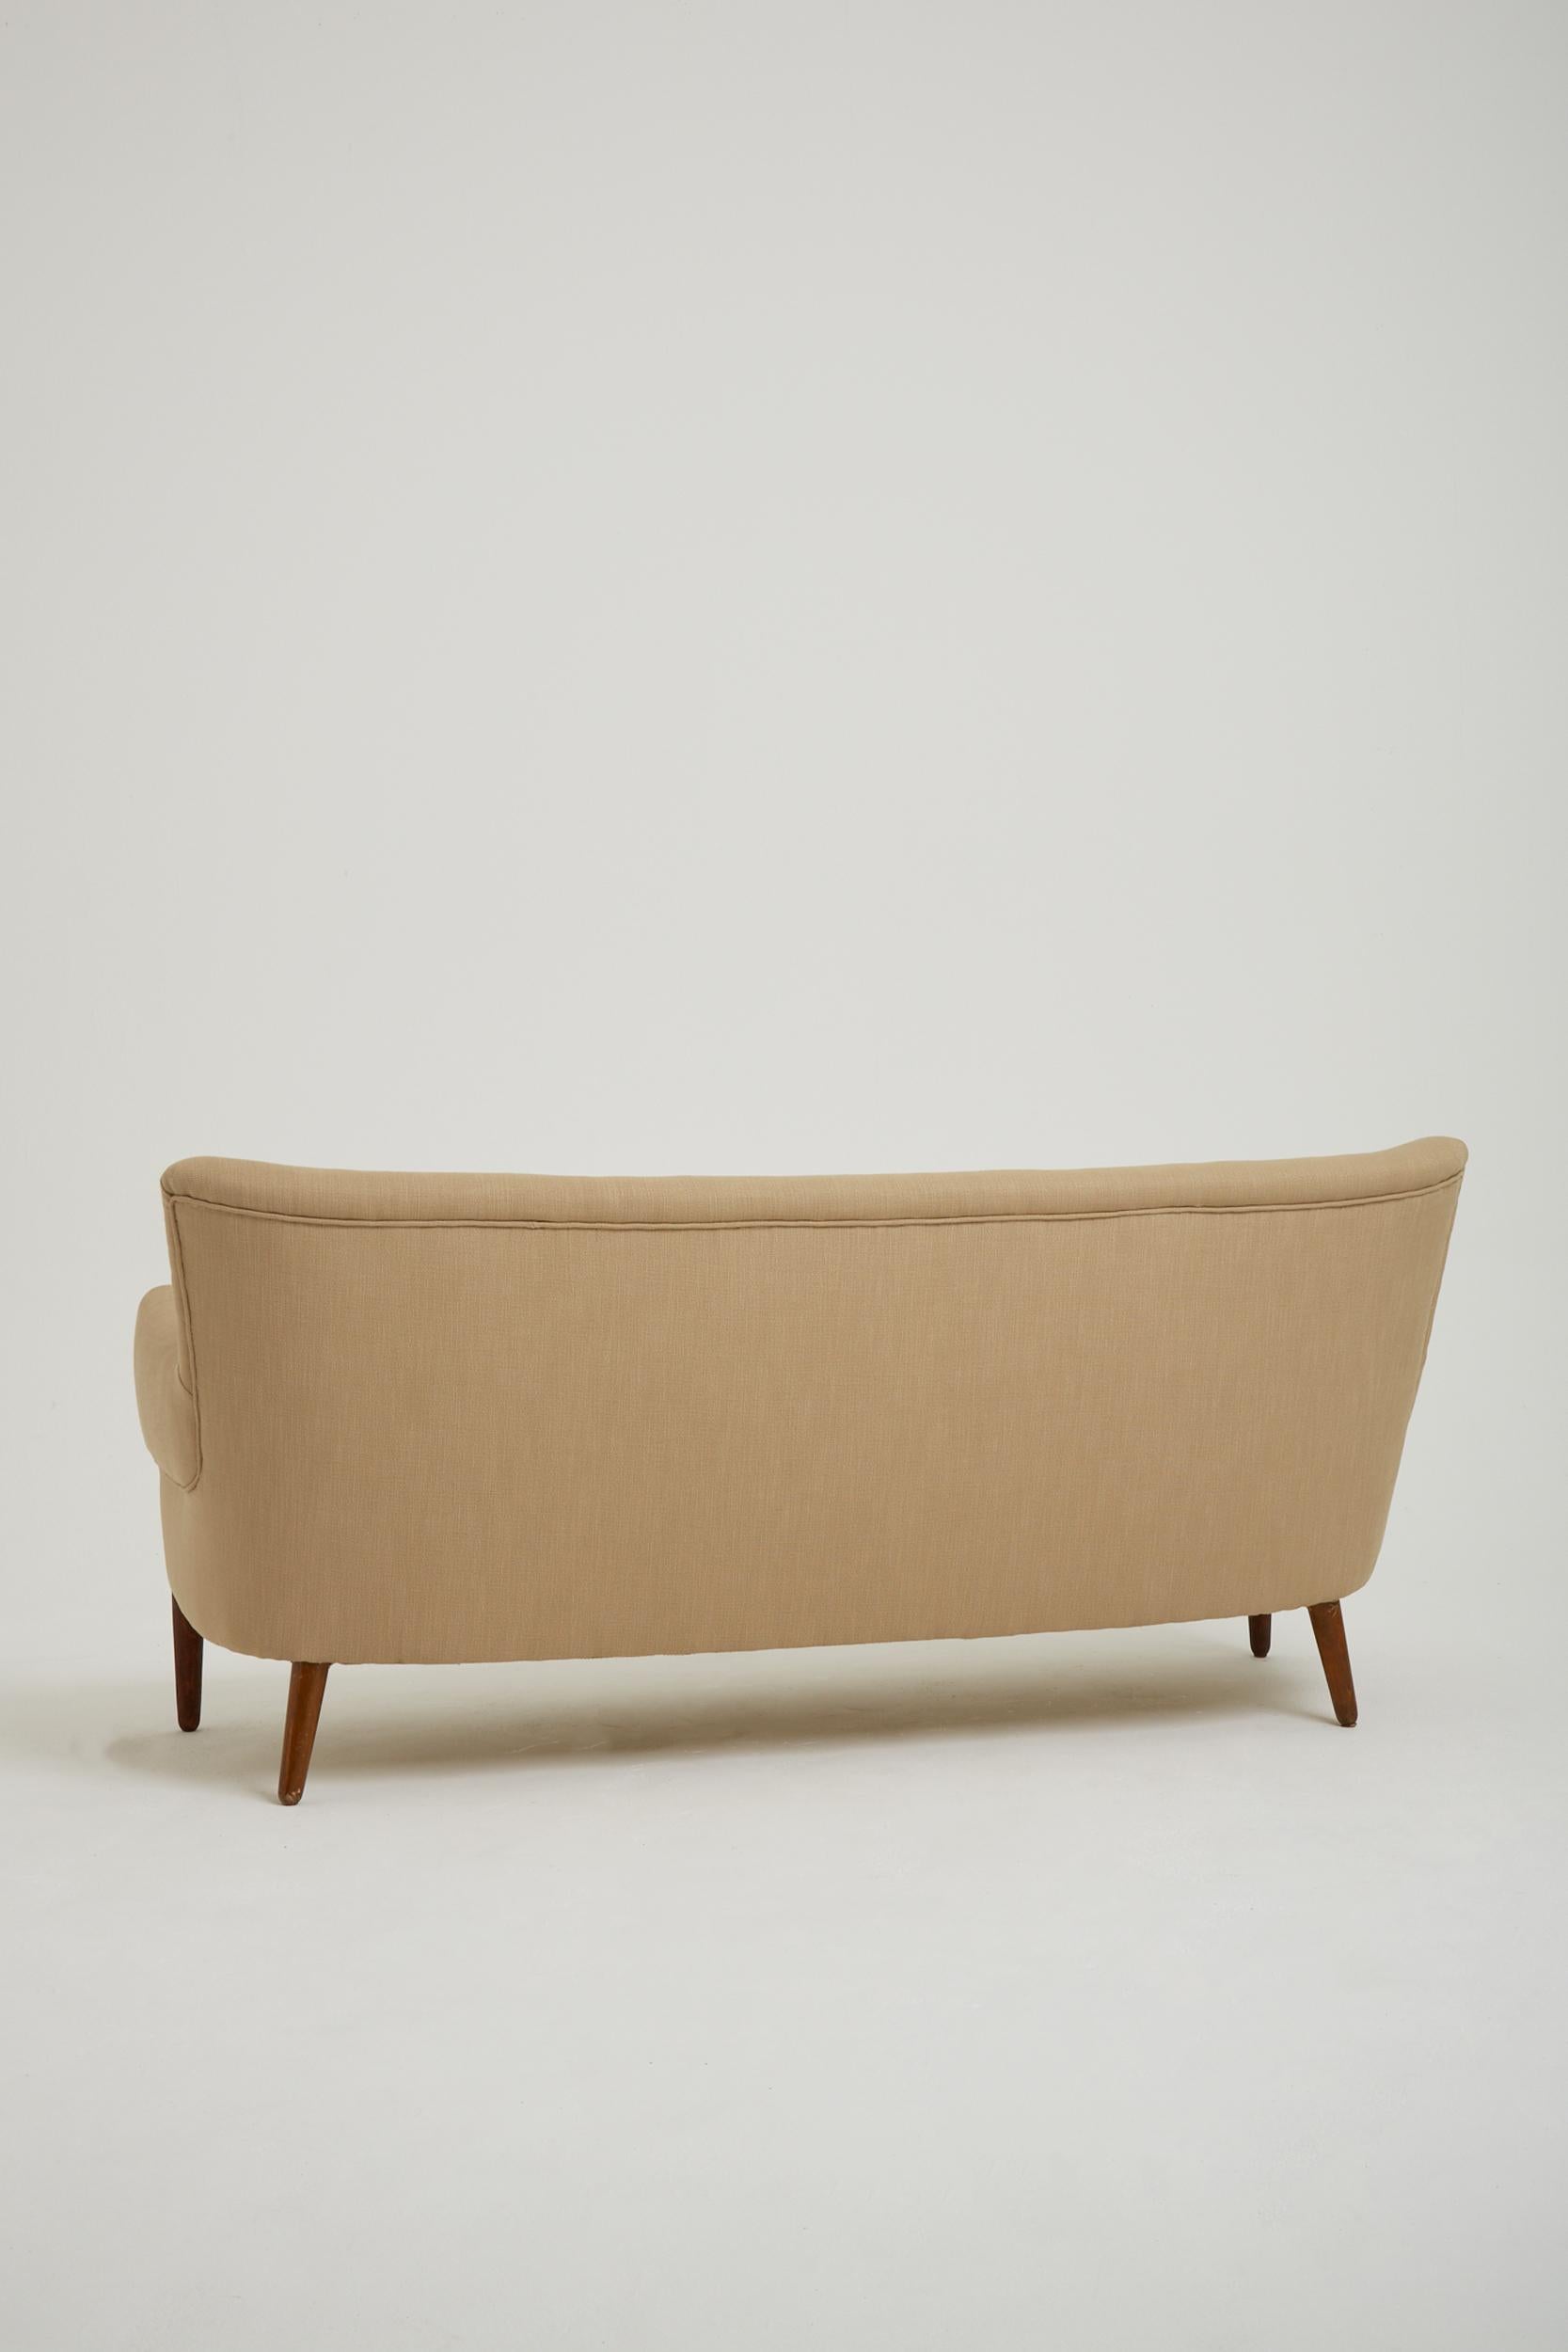 Fabric Swedish Modern Buttoned Sofa